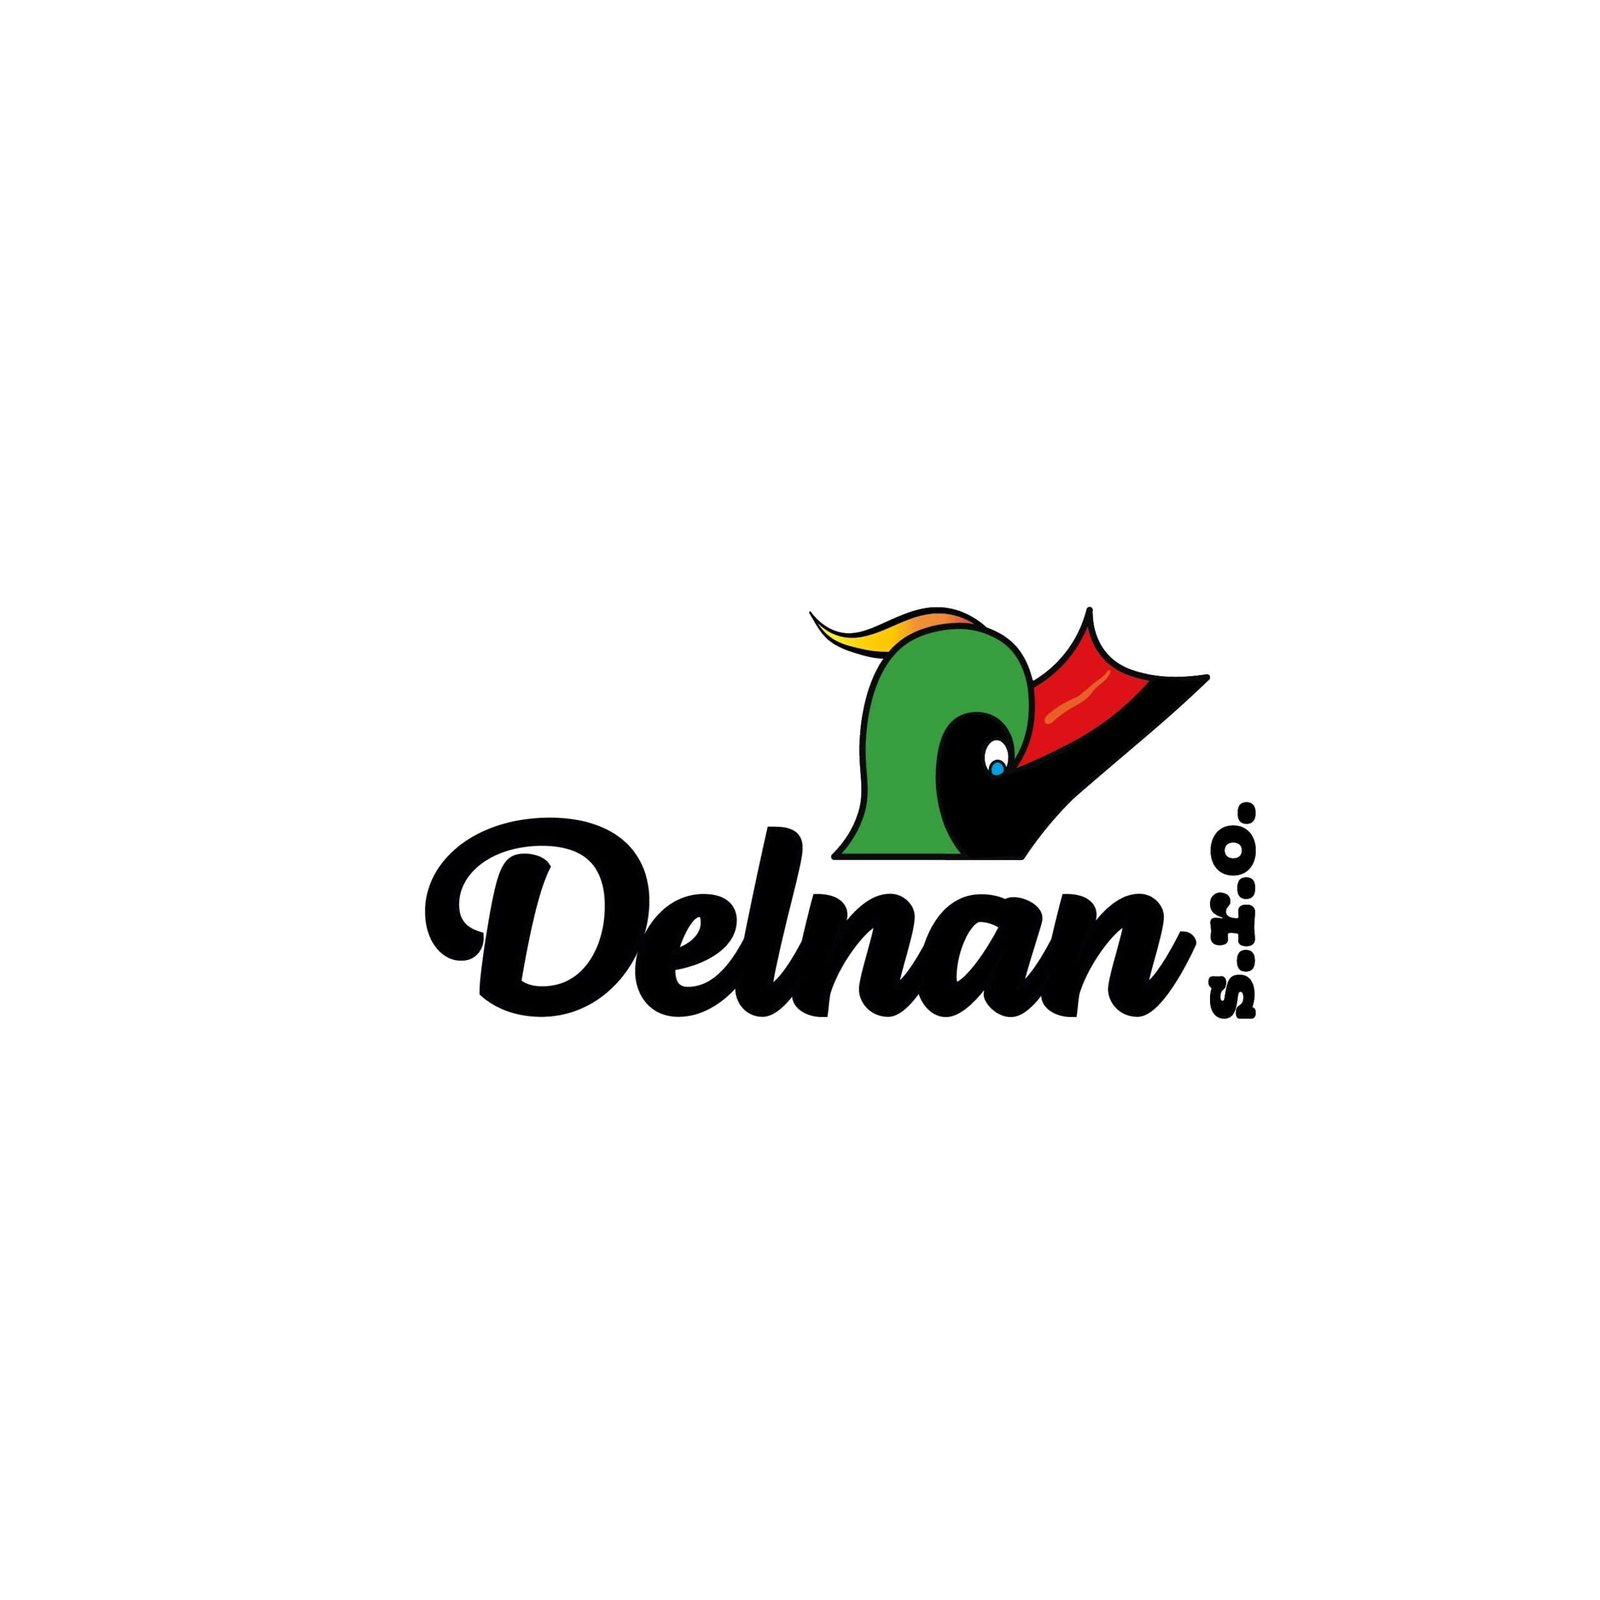 Logo Delnan